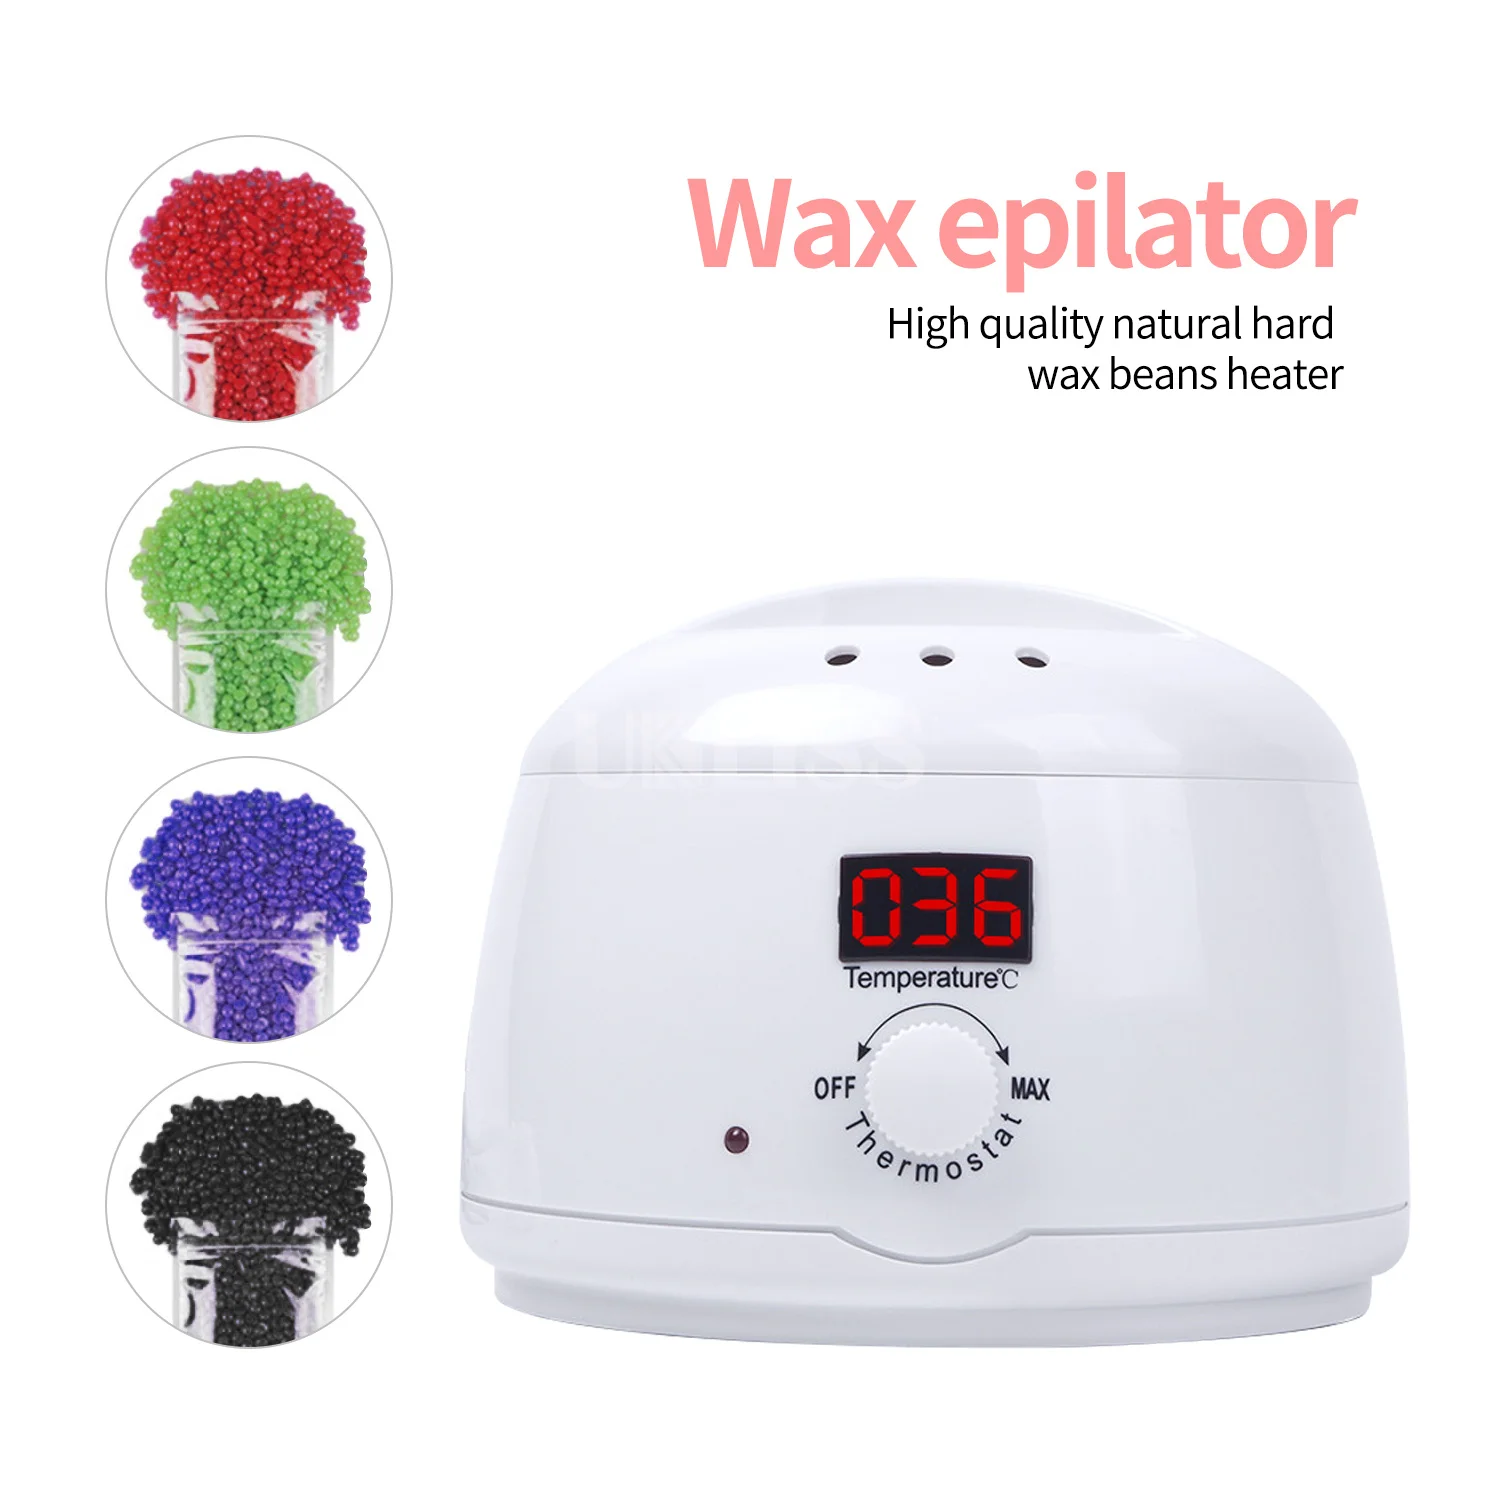 

Hot Wax Warmer Wax Epilator Shaving Wax Cartridge Wax Heater Machine Wax Dipping Pot Wax Kit LED Display Women Waxing Depilation